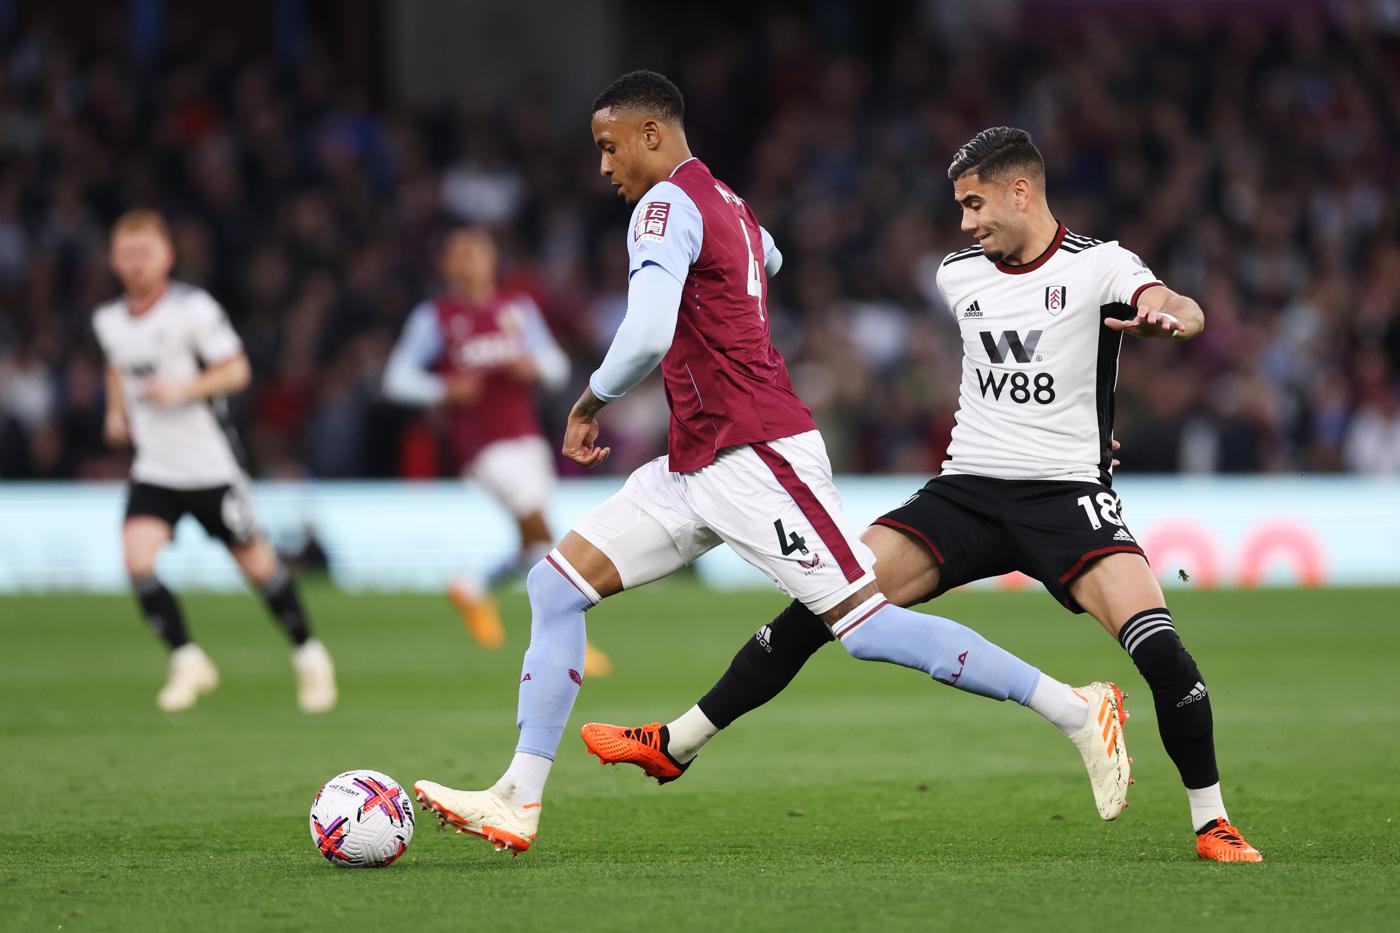 Aston Villa vs Fulham - 1-0. English Championship, round of 33. Match review, statistics.